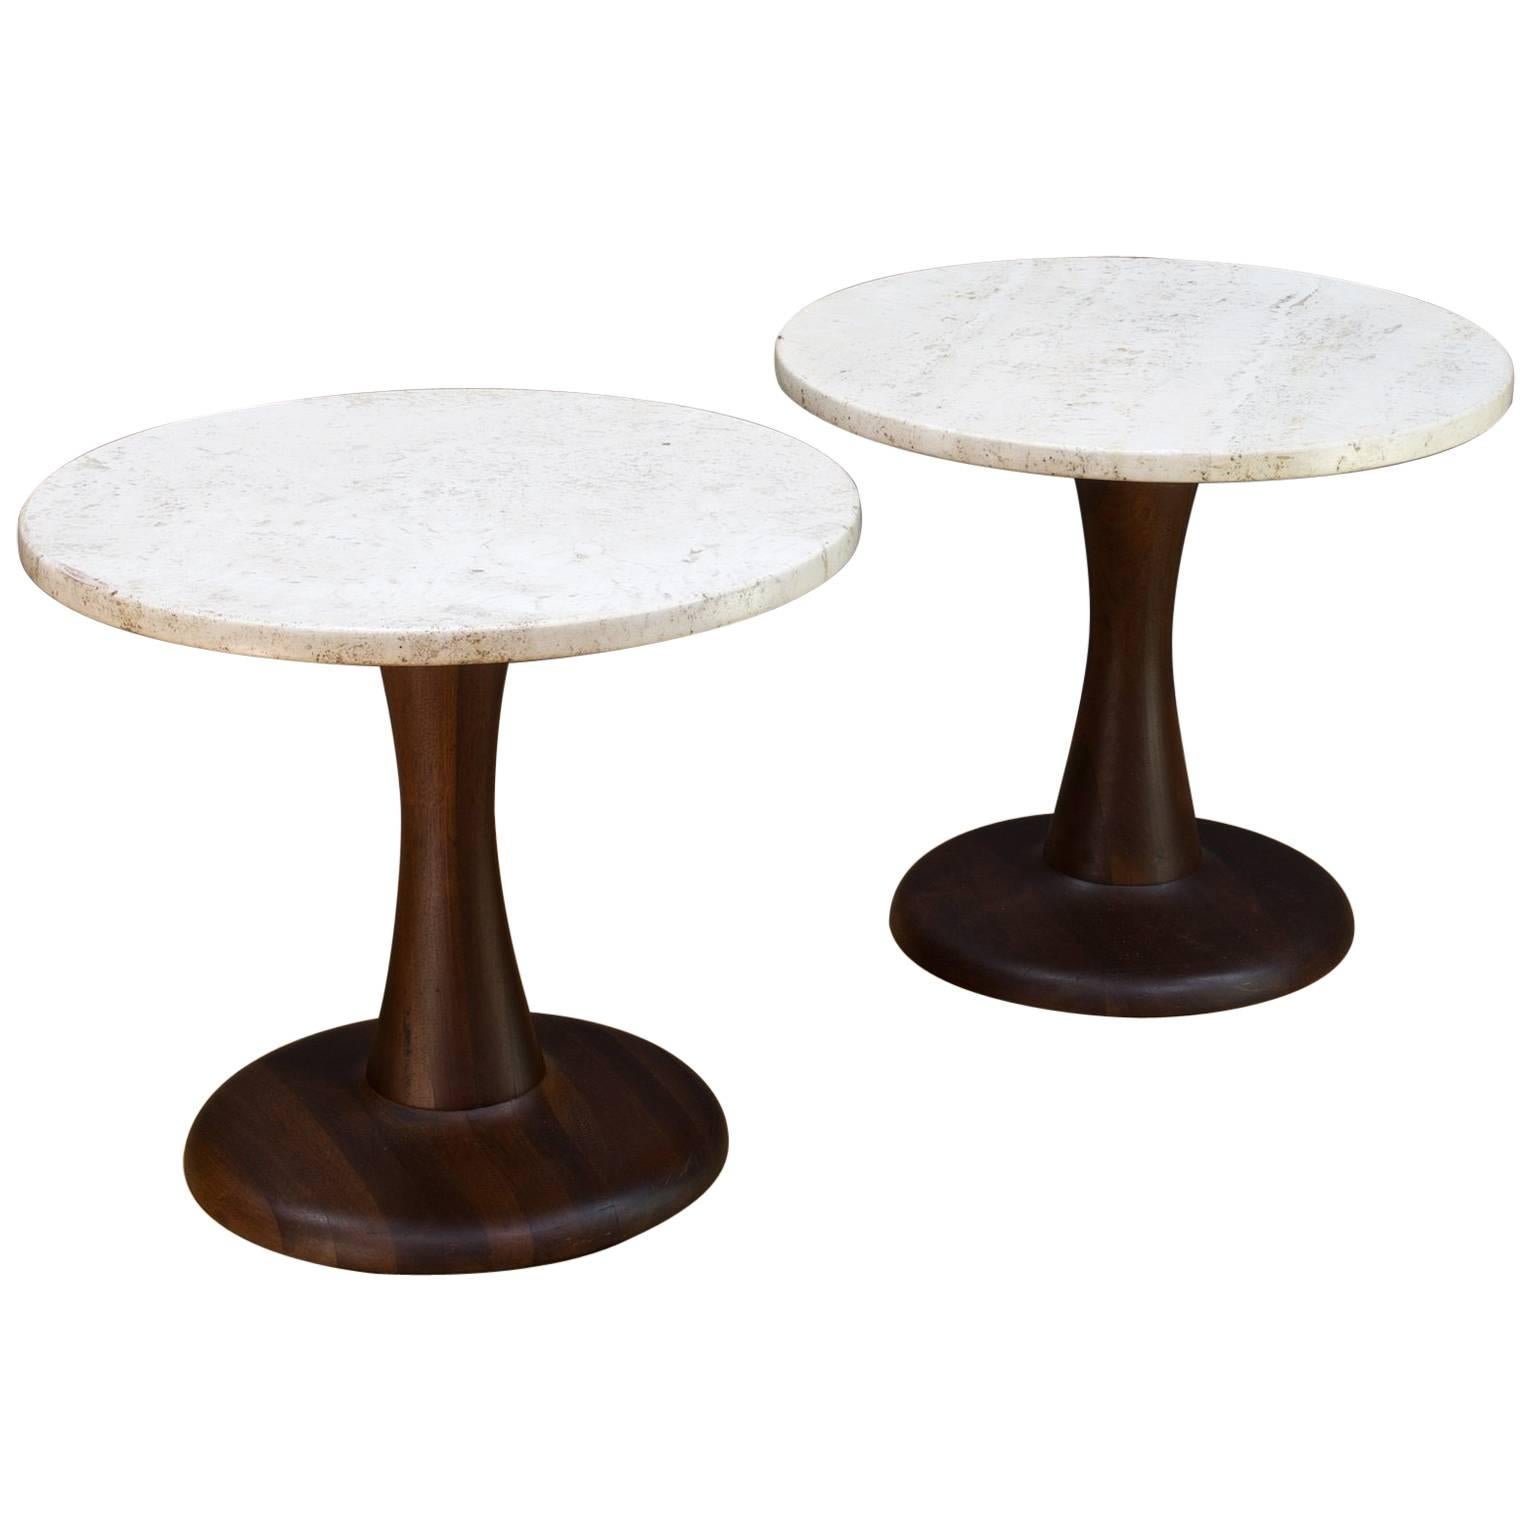 Pair of Rustic Modern Turned Walnut & Travertine Marble Pedestal Side Tables